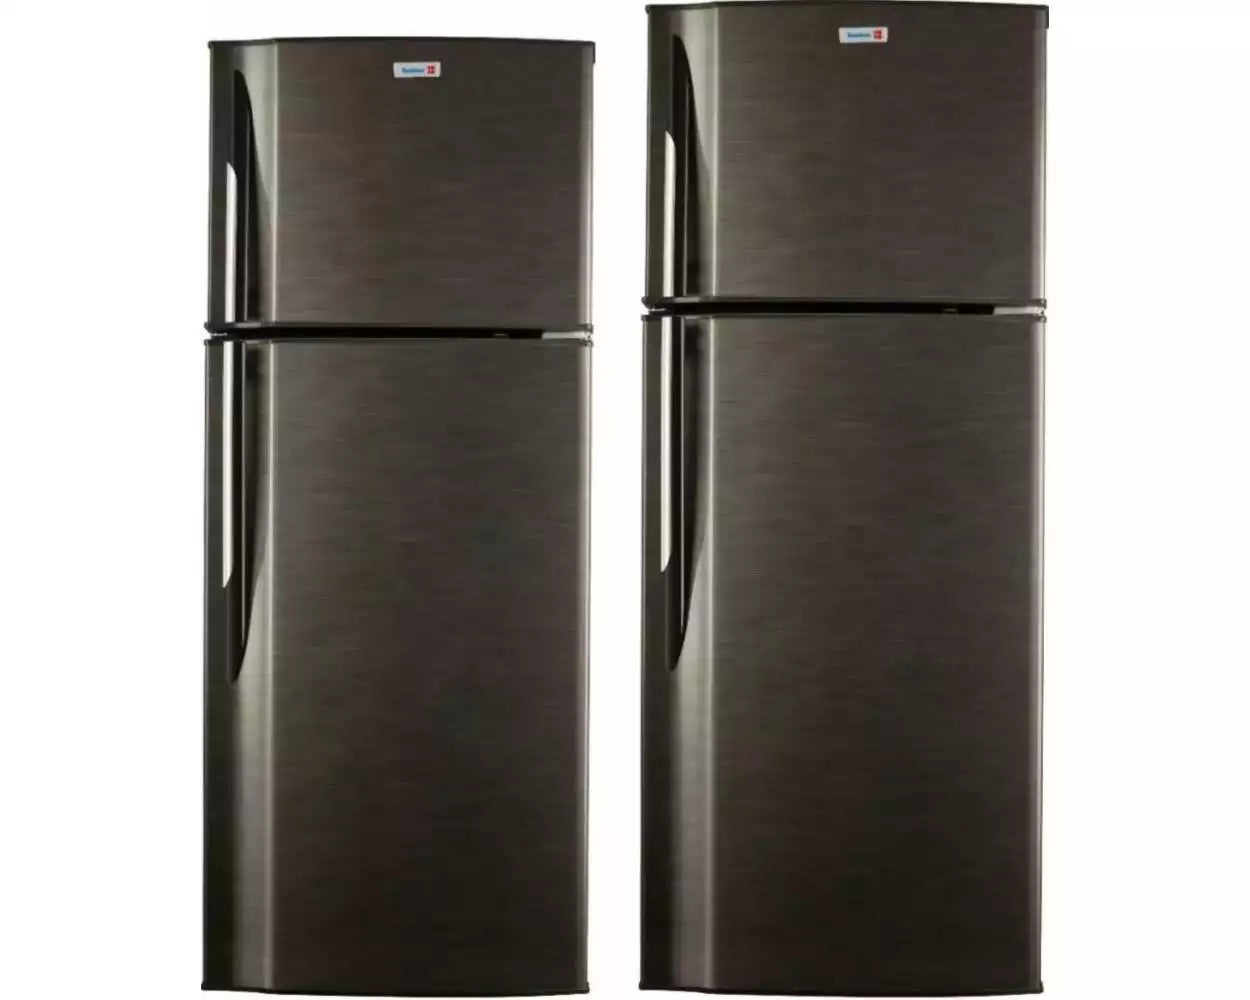 Scanfrost 435L Frost Free Inverter Refrigerator SFR435W-INV